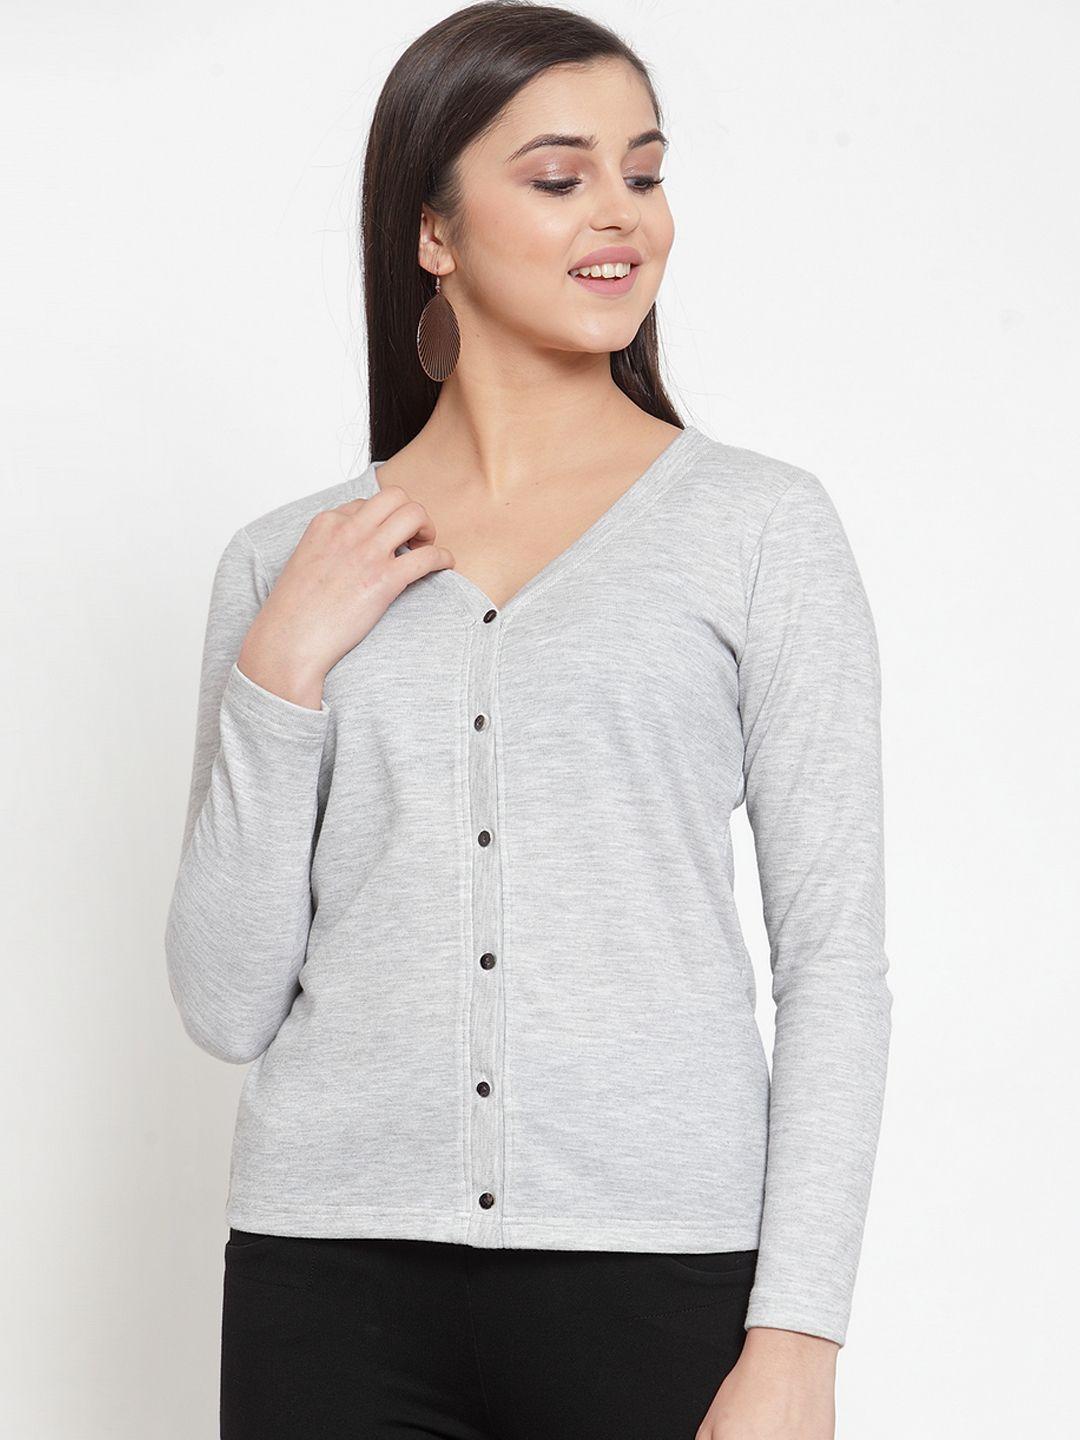 kassually women grey solid cardigan sweater